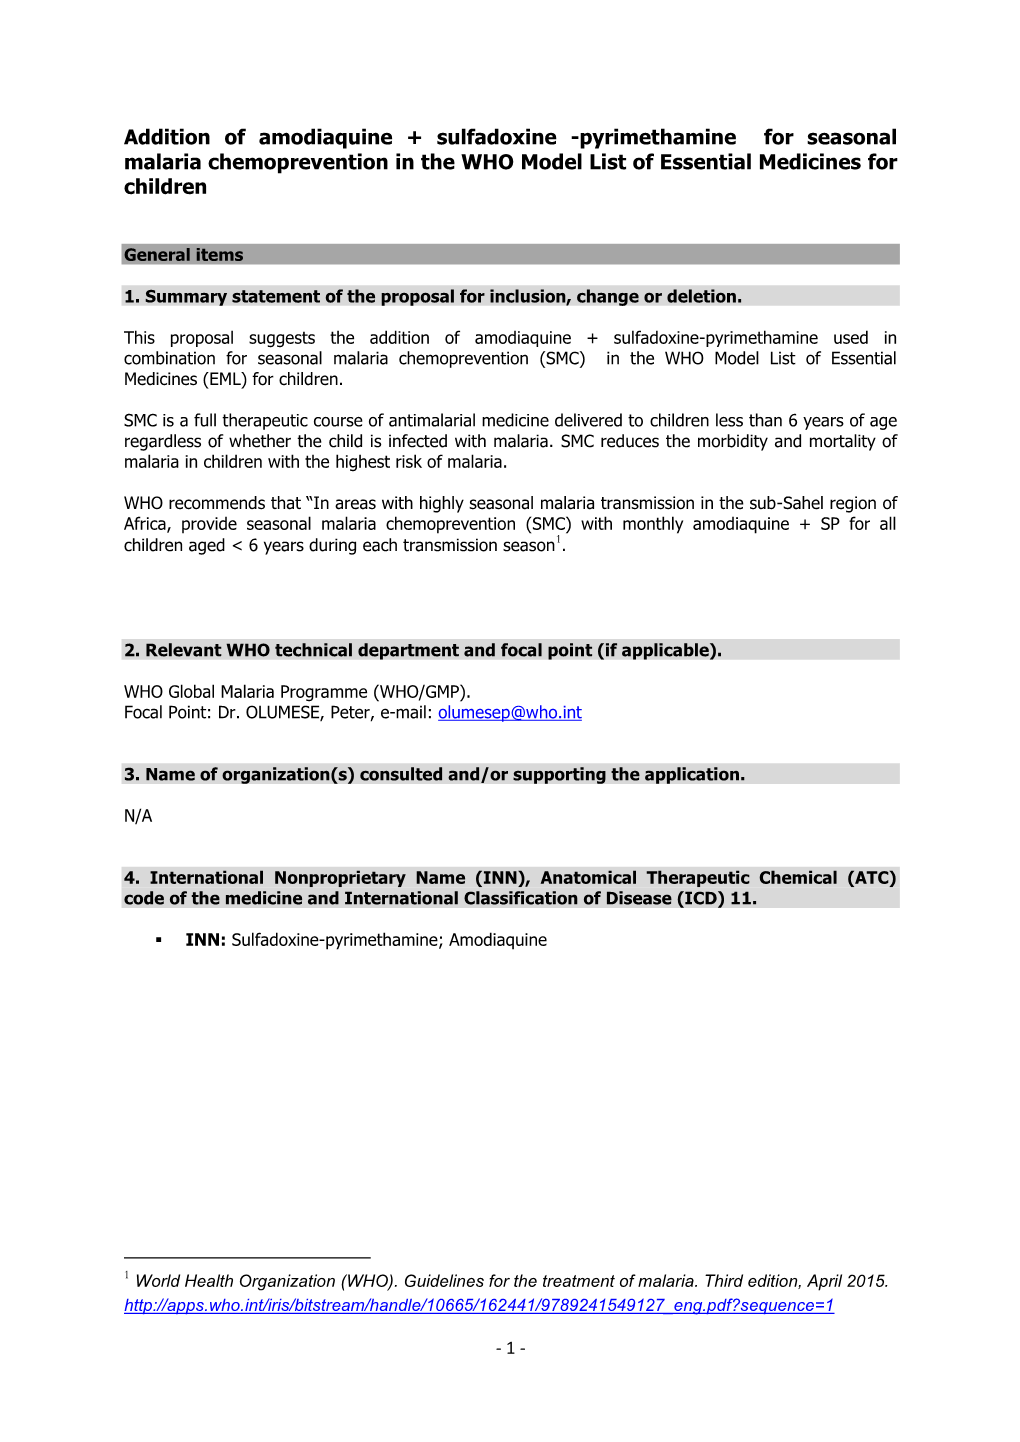 Addition of Amodiaquine + Sulfadoxine -Pyrimethamine for Seasonal Malaria Chemoprevention in the WHO Model List of Essential Medicines for Children